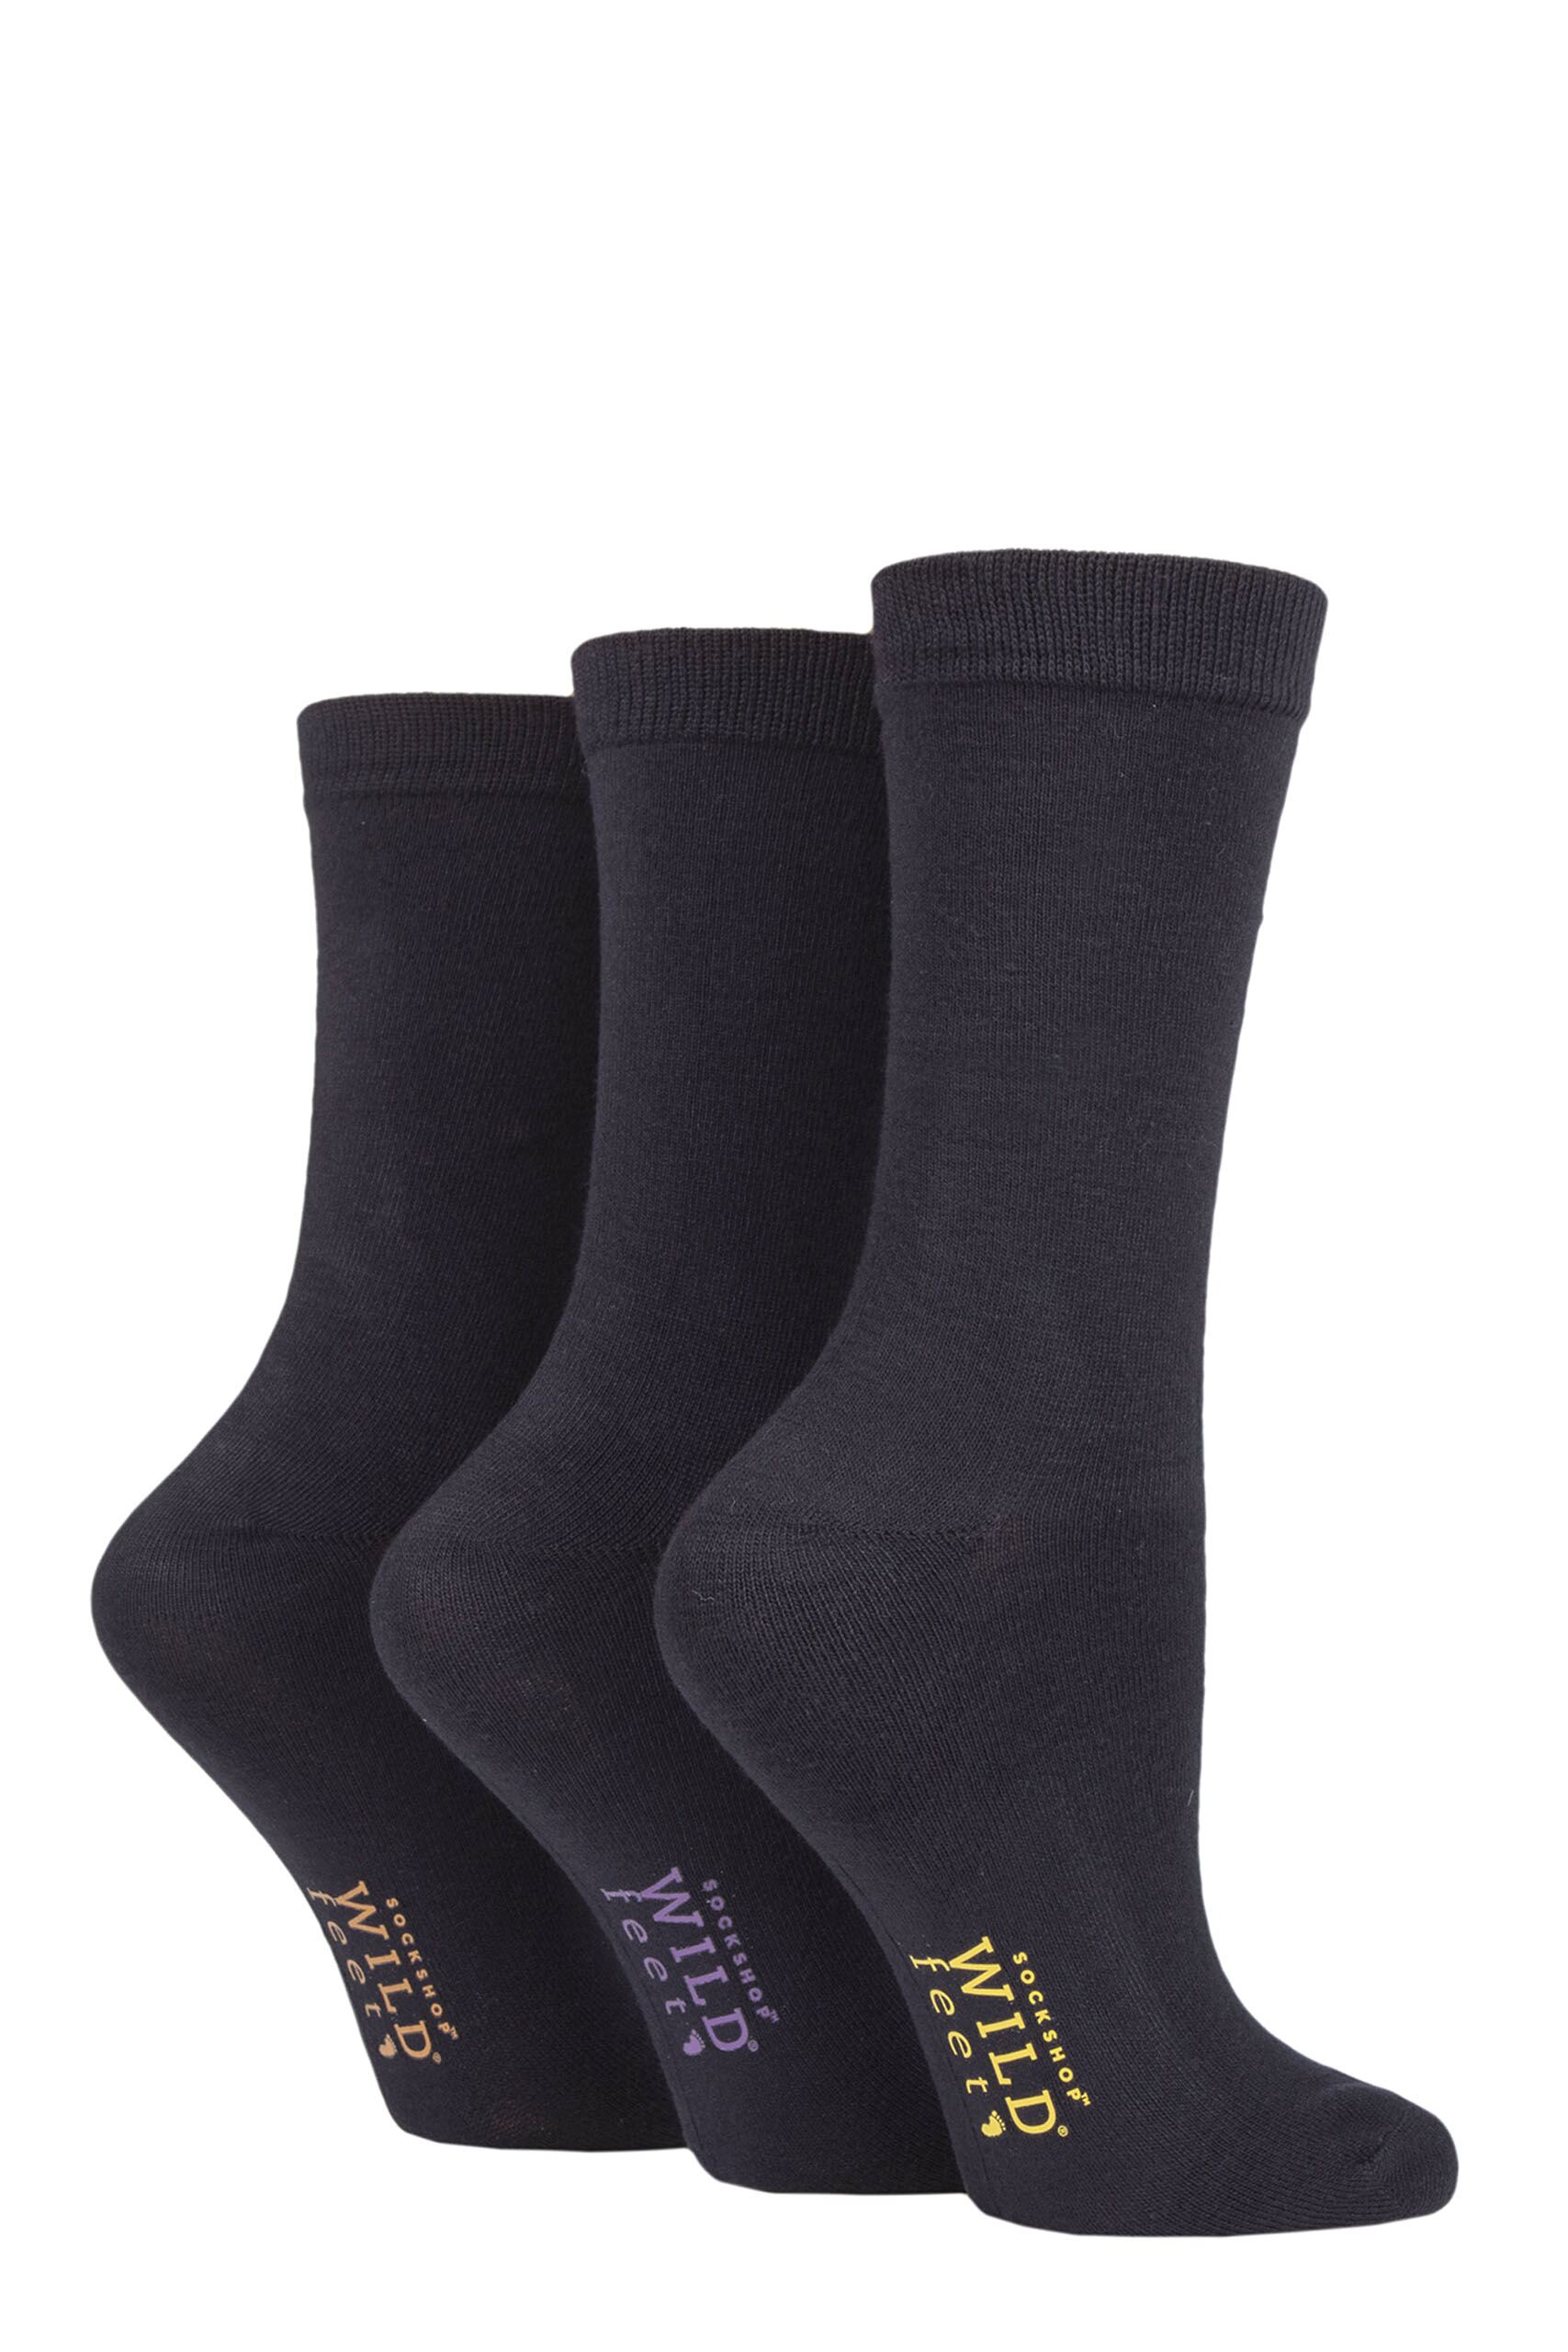 Ladies 3 Pair SockShop Wild Feet Slogan Cotton Sports Socks